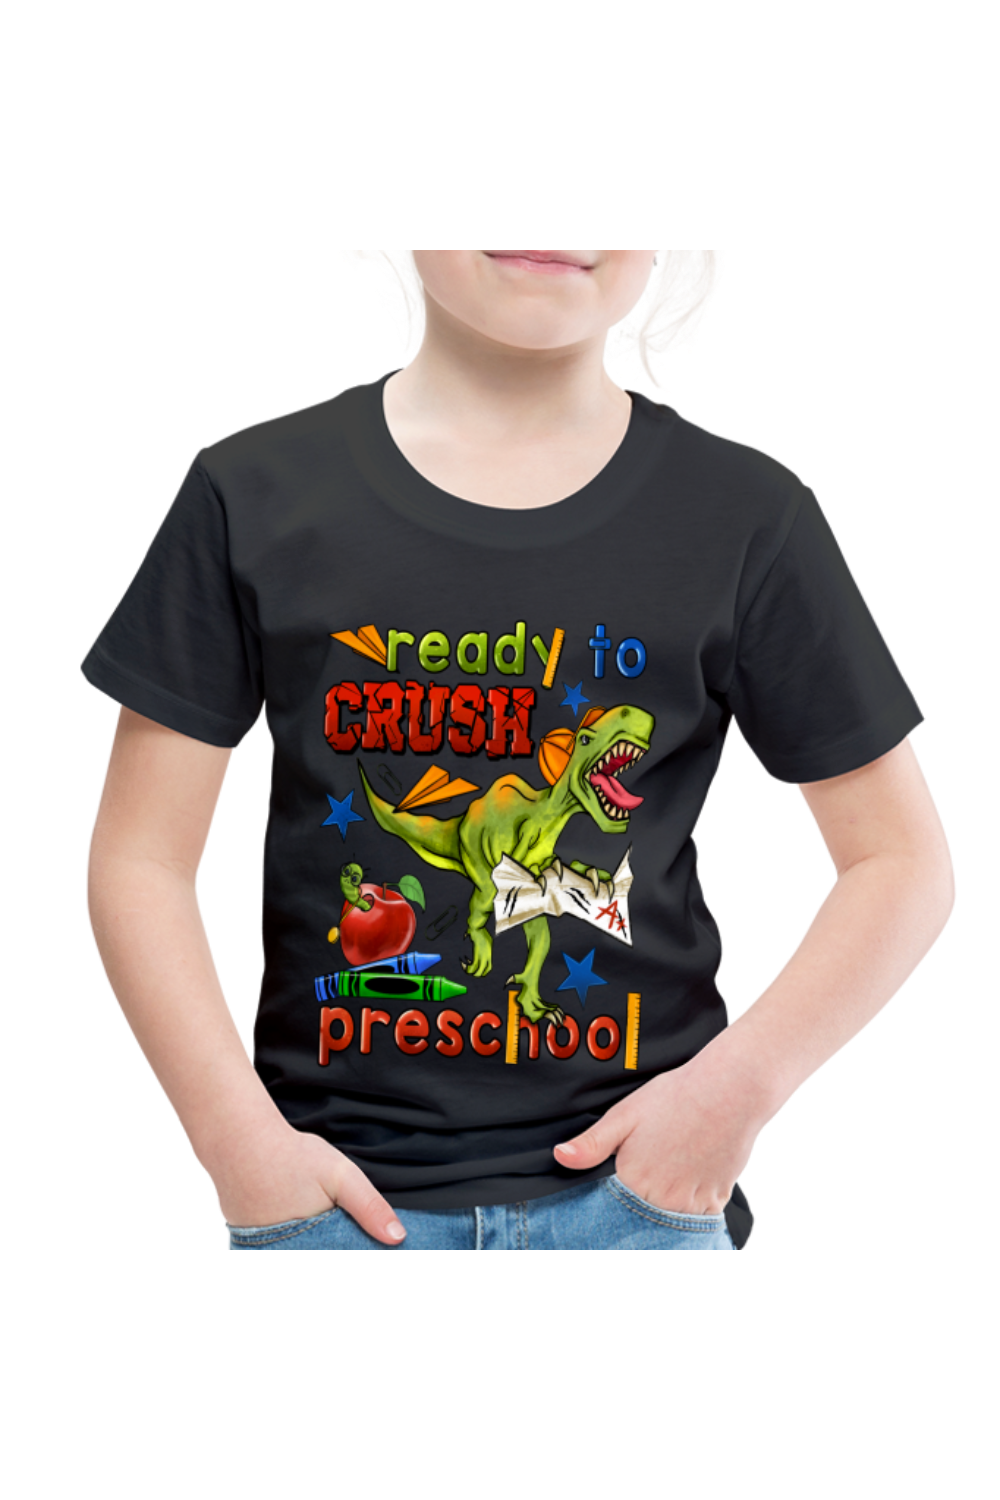 Toddler Boys Ready To Crush Preschool Short Sleeve Tee Shirt for Back To School - black